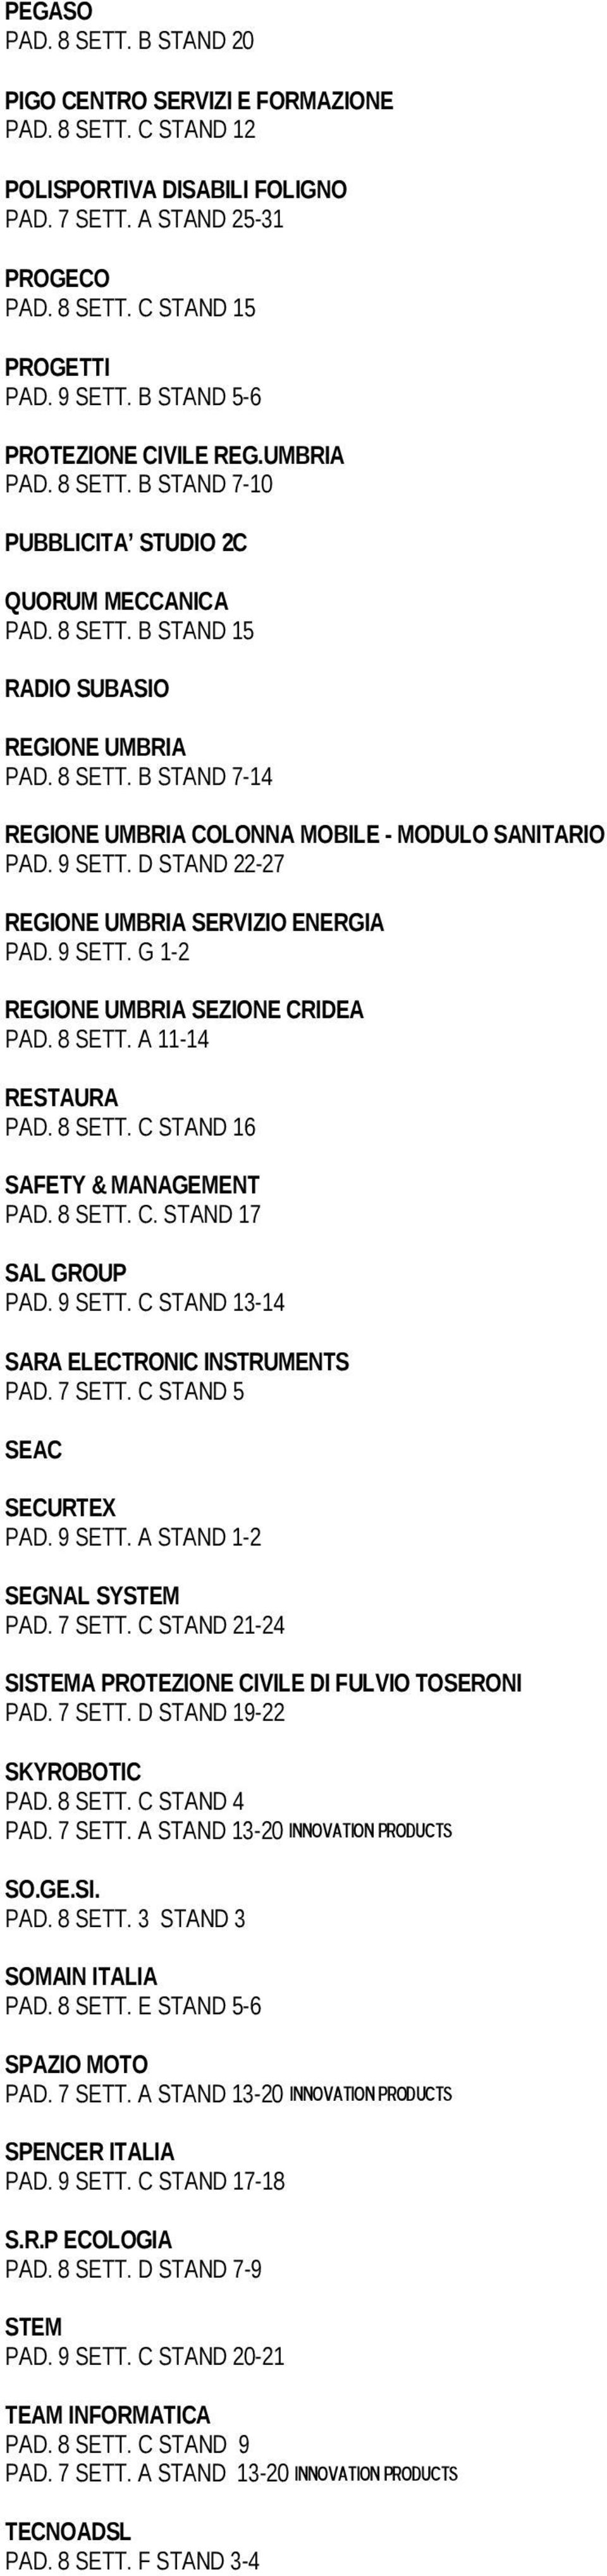 9 SETT. D STAND 22-27 REGIONE UMBRIA SERVIZIO ENERGIA PAD. 9 SETT. G 1-2 REGIONE UMBRIA SEZIONE CRIDEA PAD. 8 SETT. A 11-14 RESTAURA PAD. 8 SETT. C STAND 16 SAFETY & MANAGEMENT PAD. 8 SETT. C. STAND 17 SAL GROUP PAD.